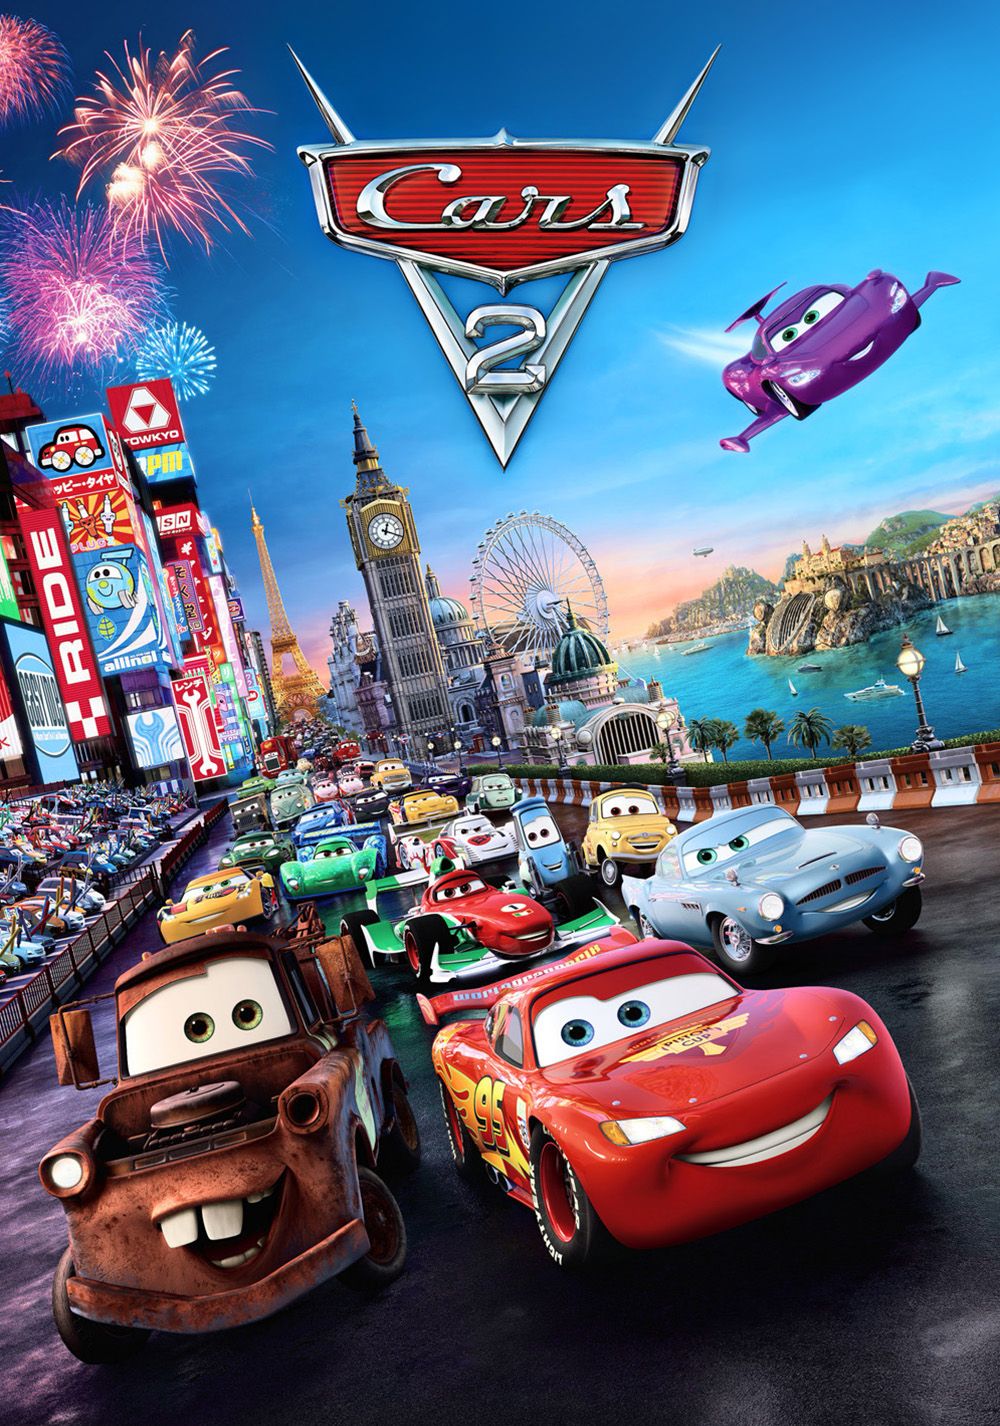 Disney Pixar Cars 2 Movie Poster